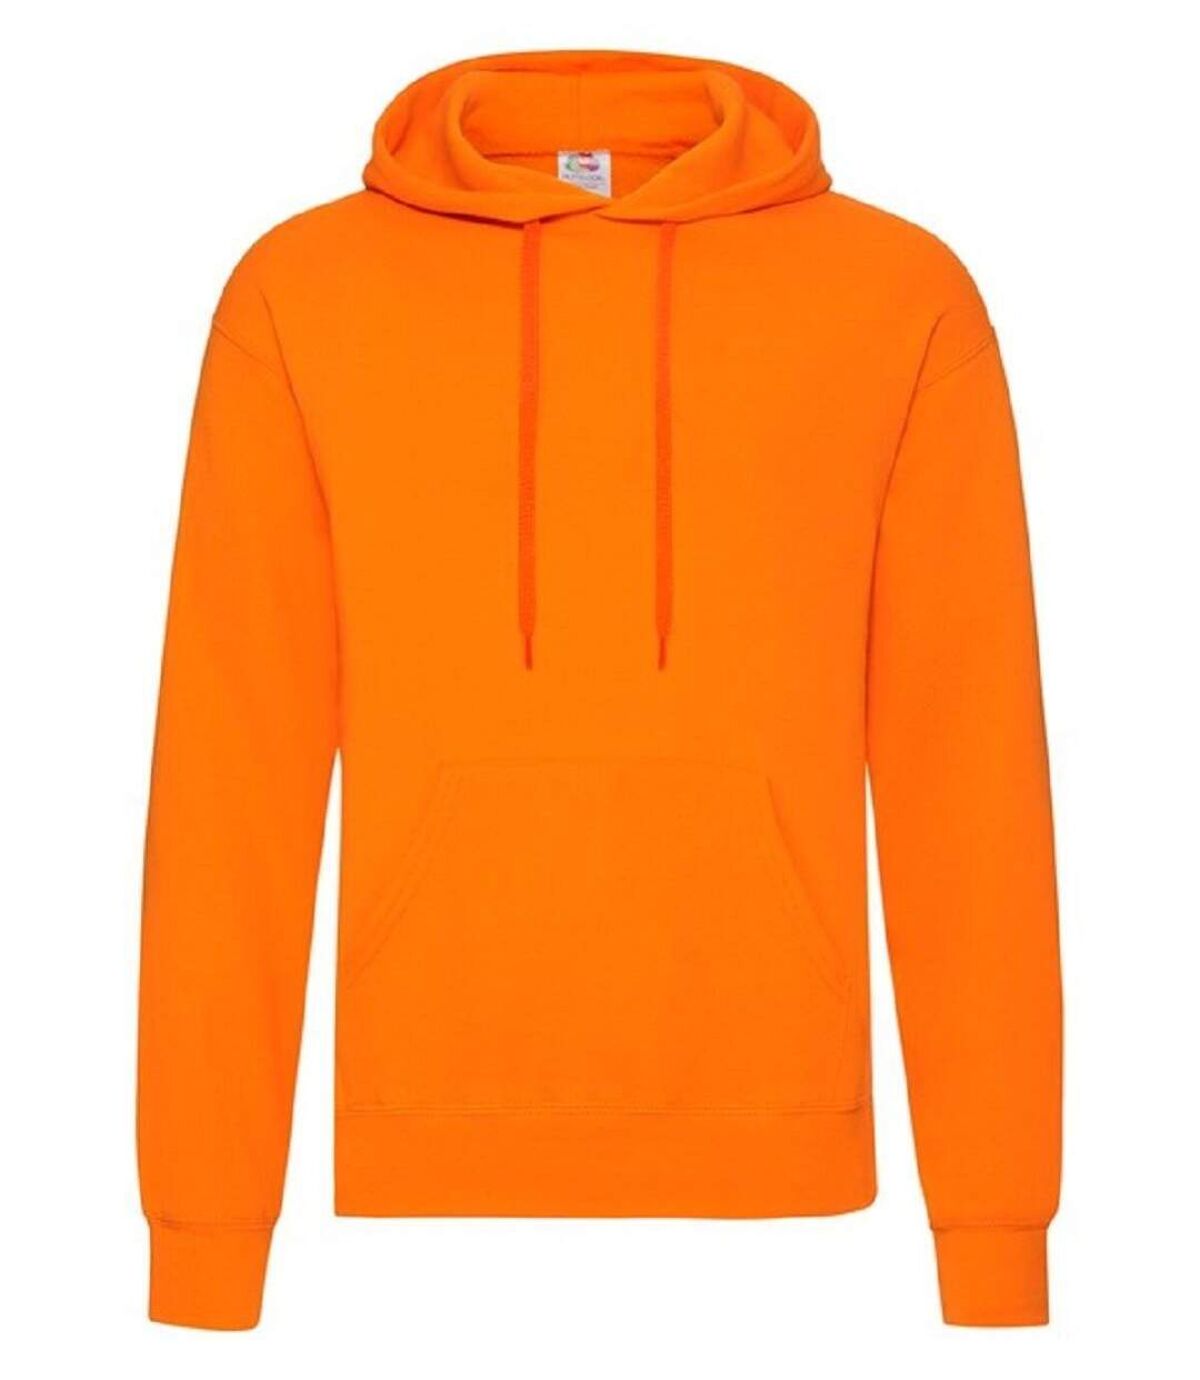 Sweat-shirt - Homme - 62-208-0 - orange